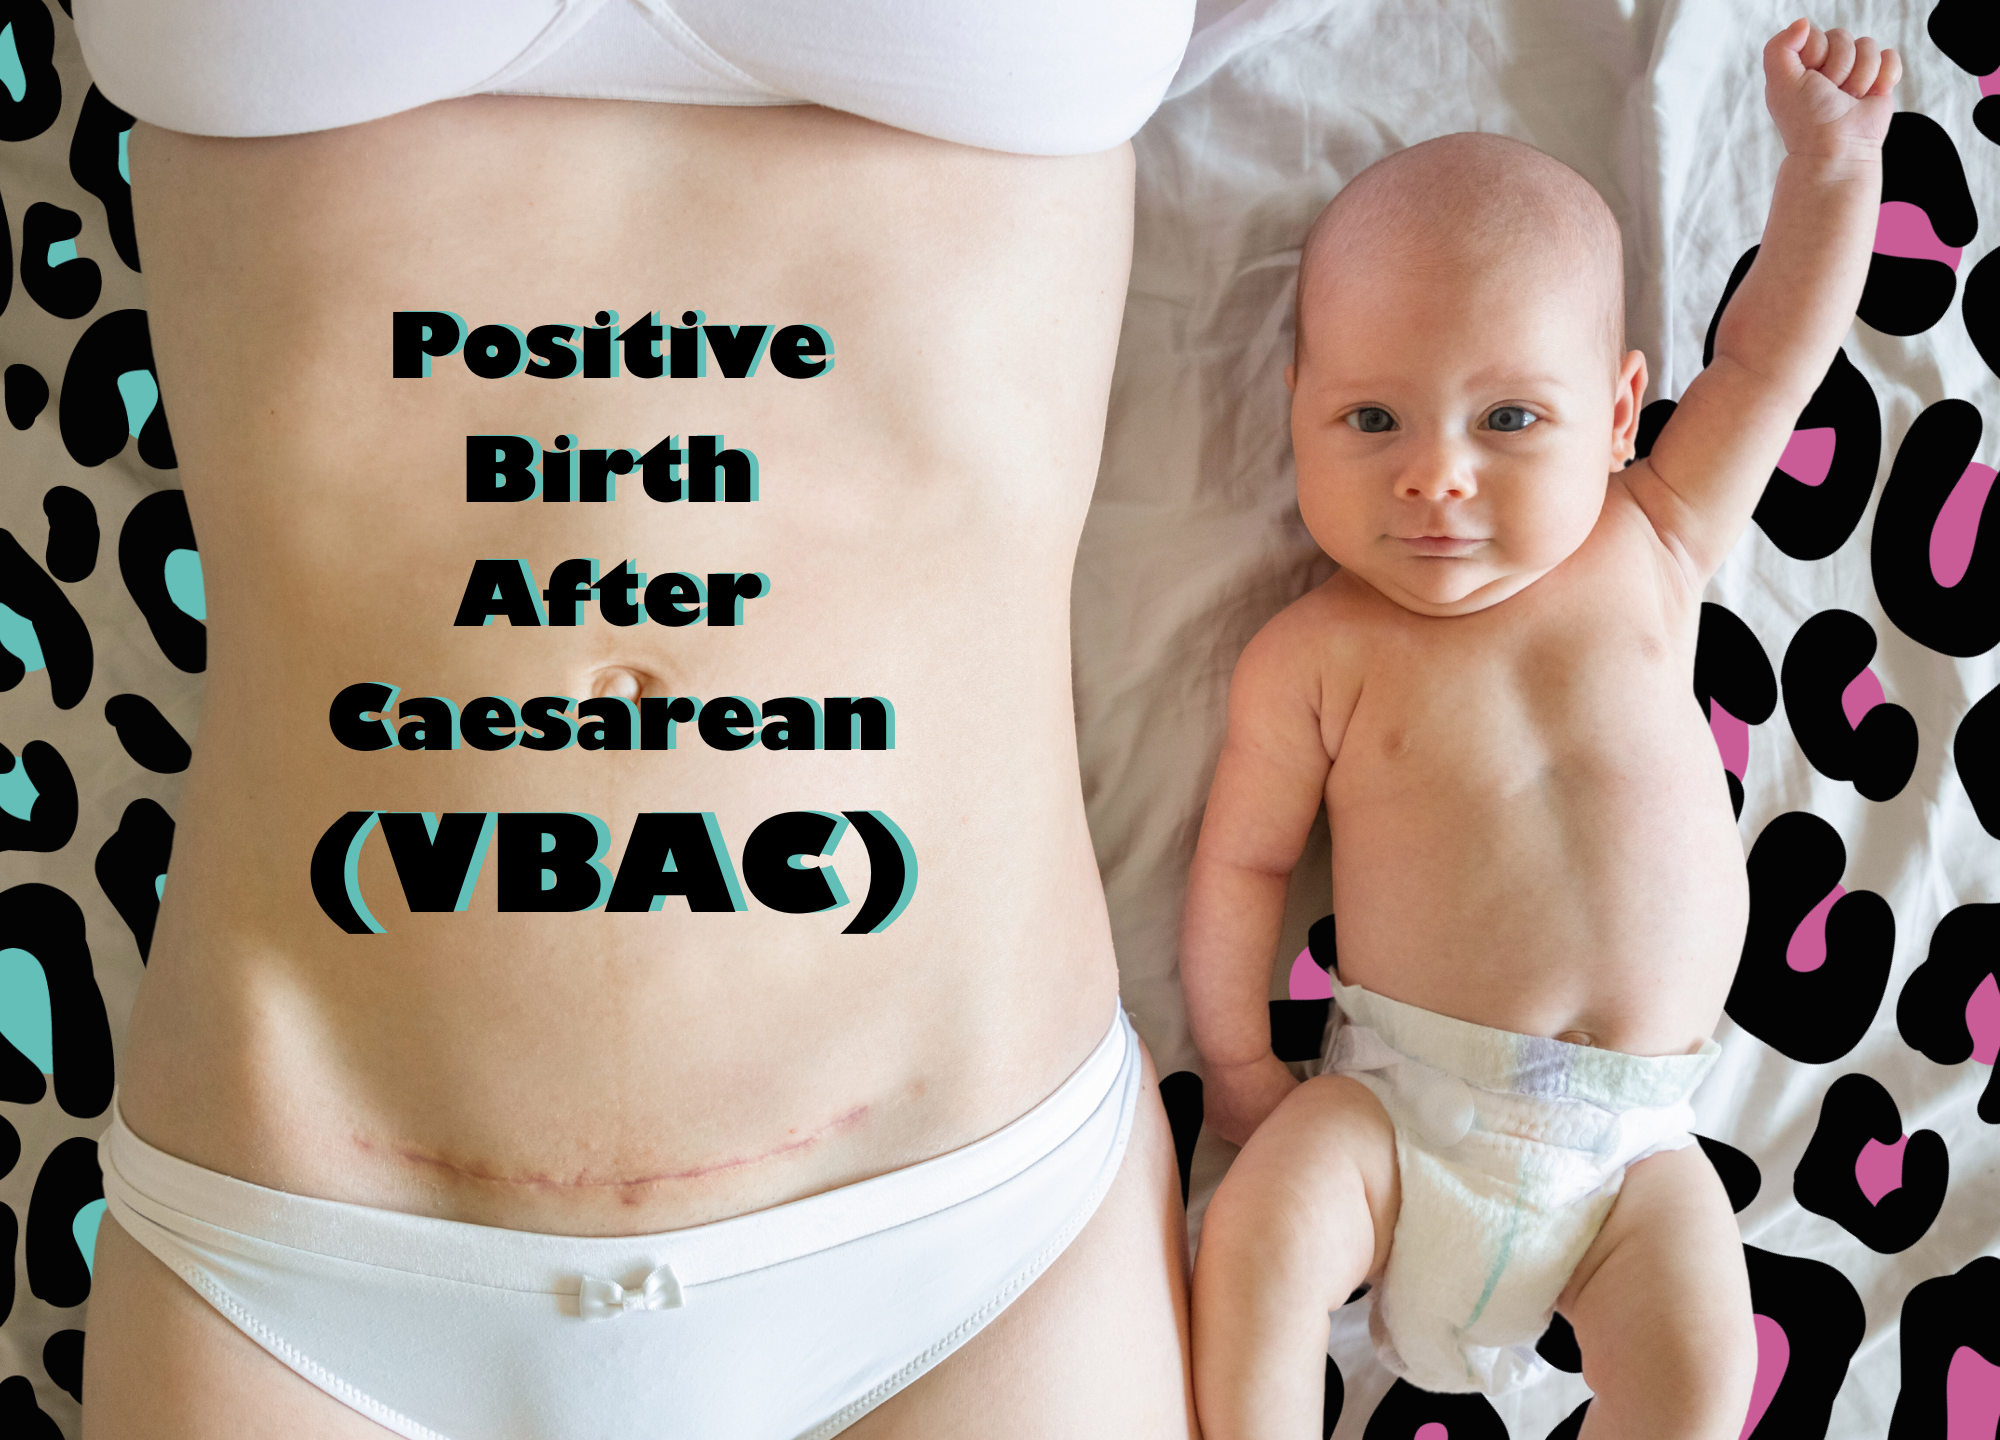 POSITIVE BIRTH AFTER CAESAREAN (VBAC)